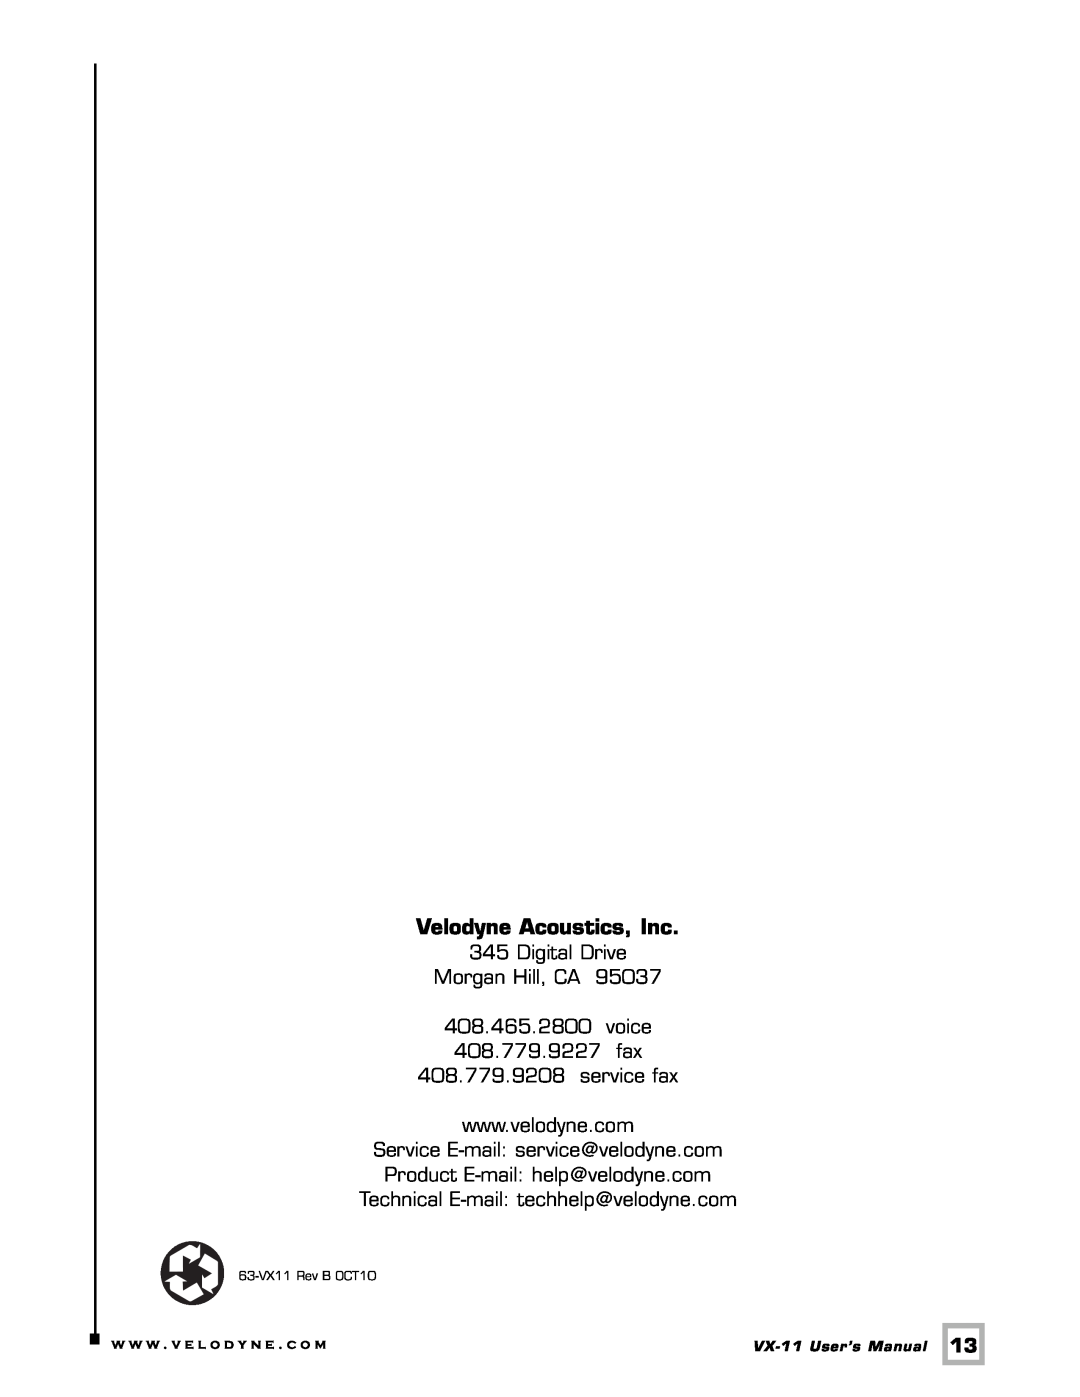 Velodyne Acoustics user manual Velodyne Acoustics, Inc, Digital Drive Morgan Hill, CA, VX-11 User’s Manual 